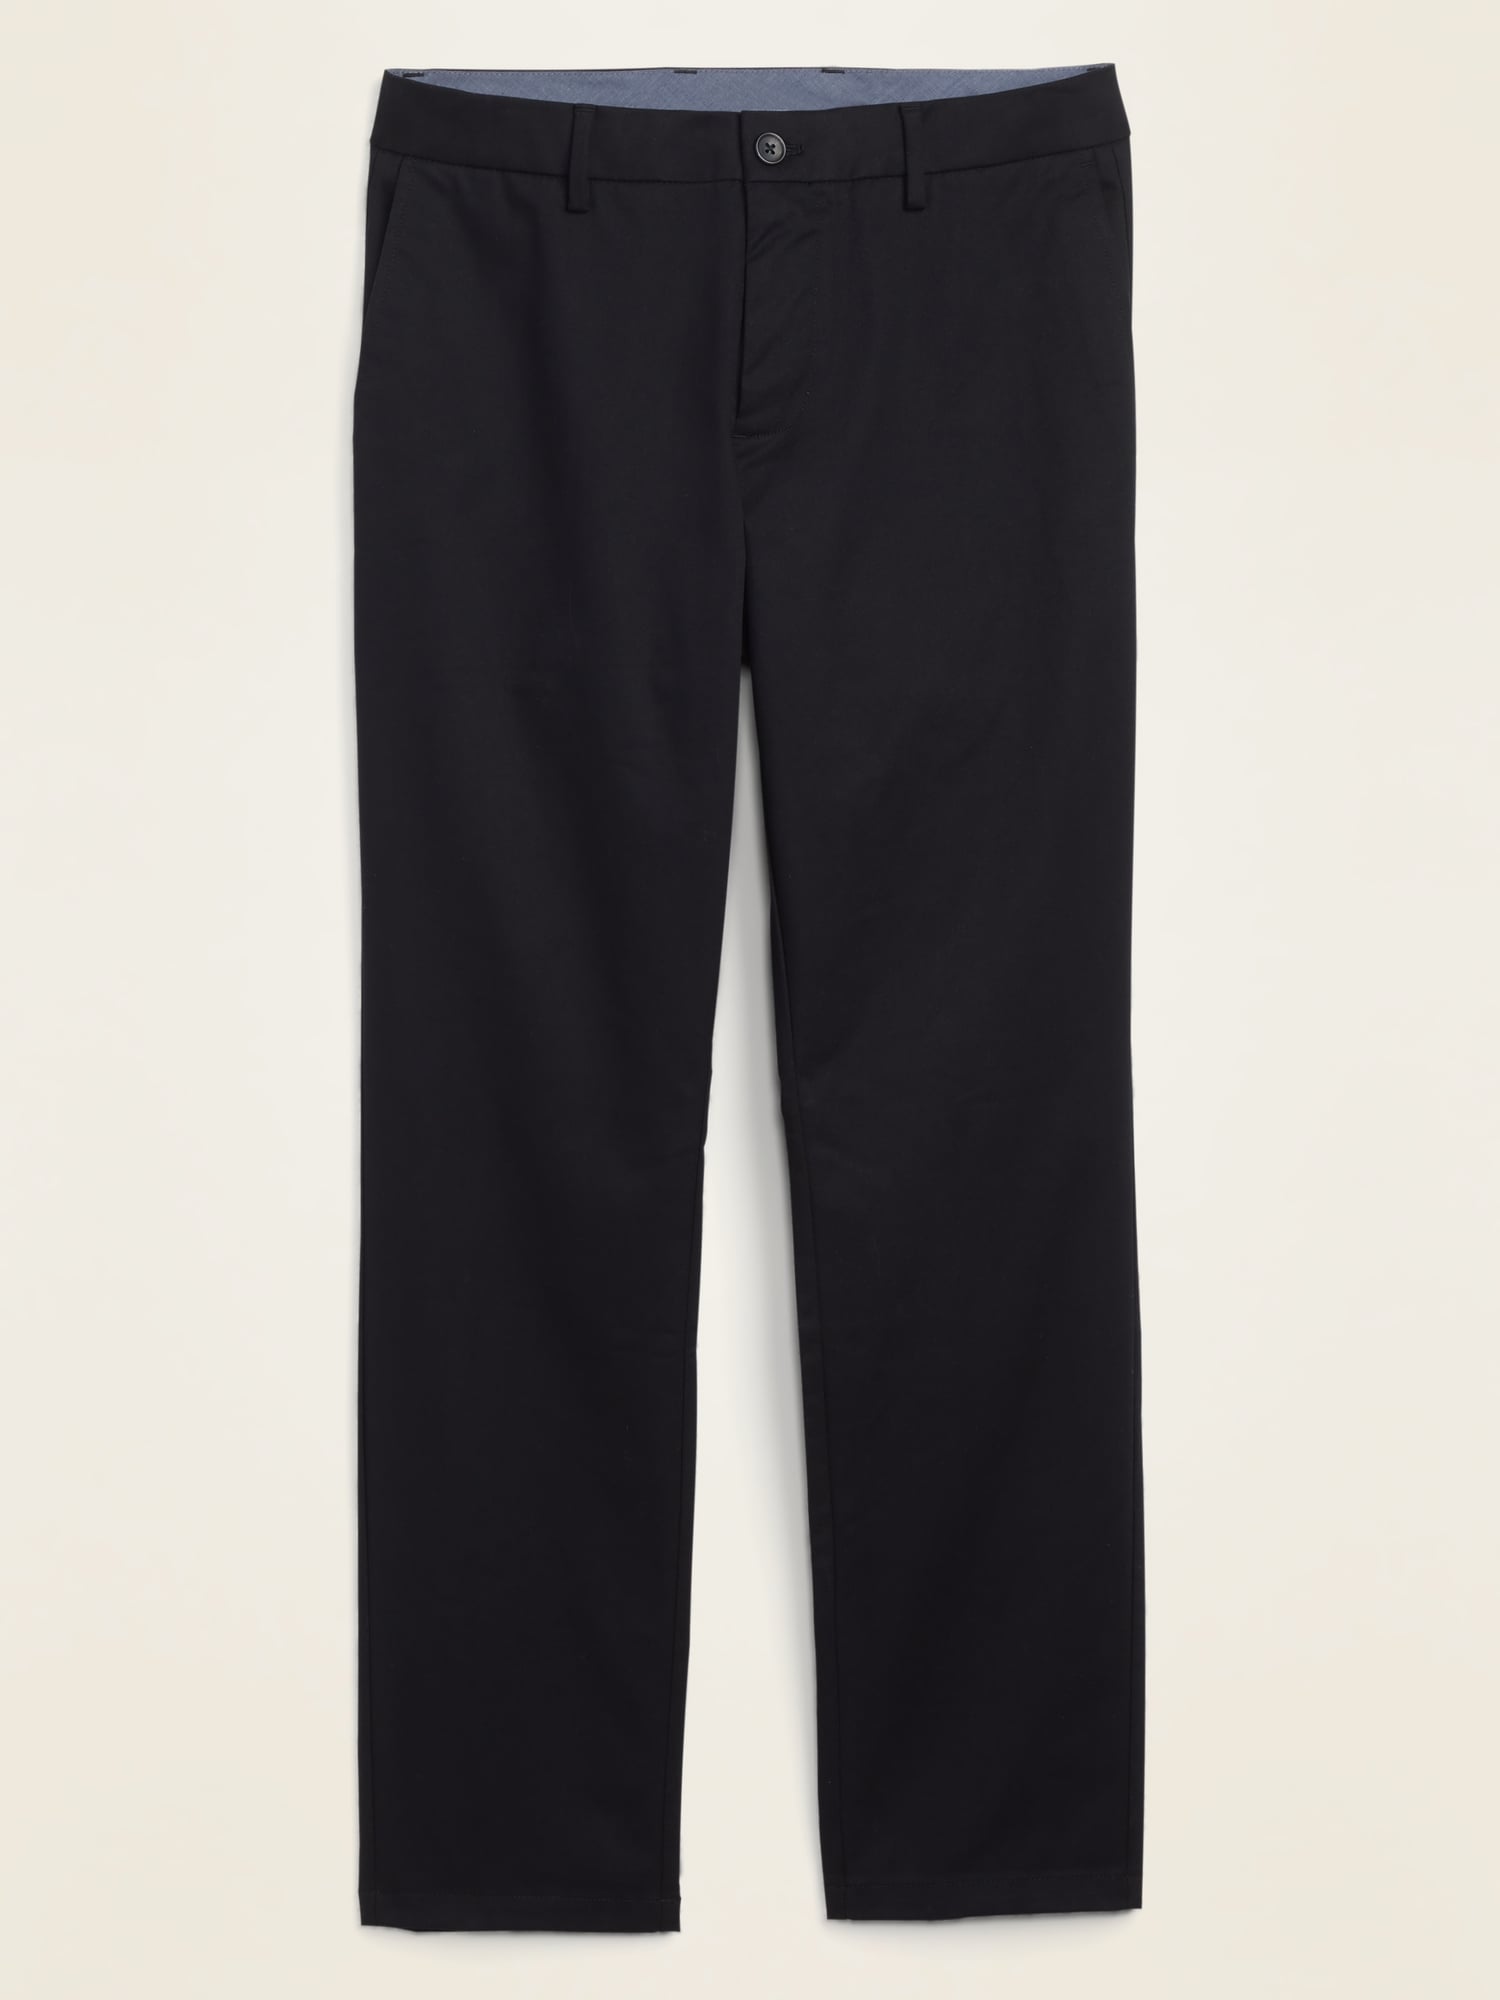 Slim Ultimate BuiltIn Flex Chino Pants for Men  Old Navy